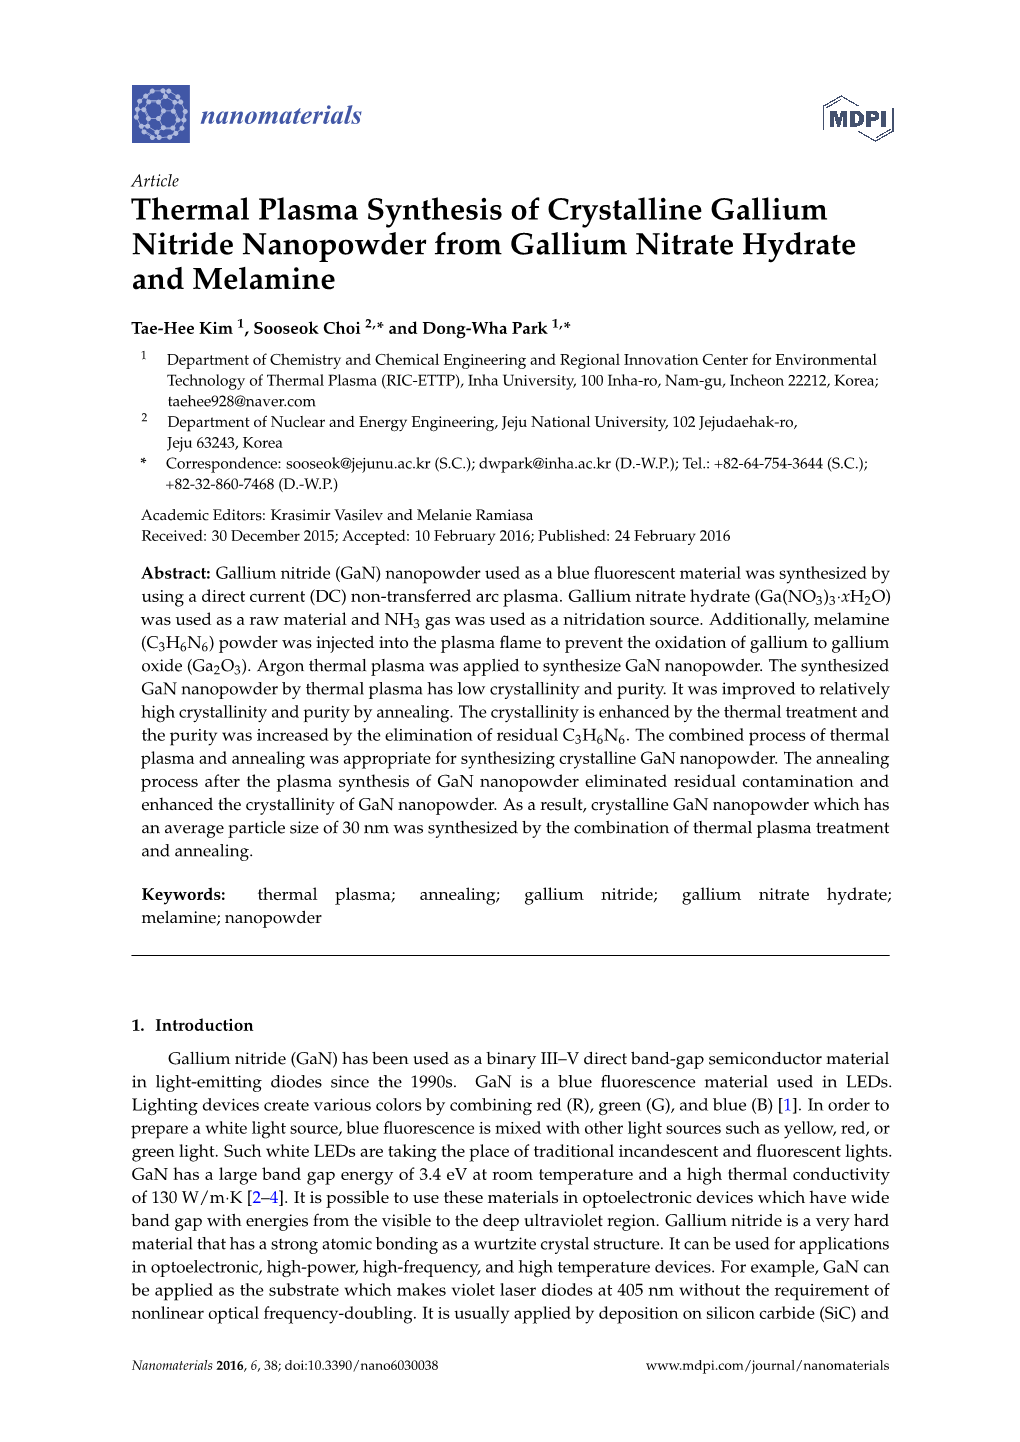 Thermal Plasma Synthesis of Crystalline Gallium Nitride Nanopowder from Gallium Nitrate Hydrate and Melamine